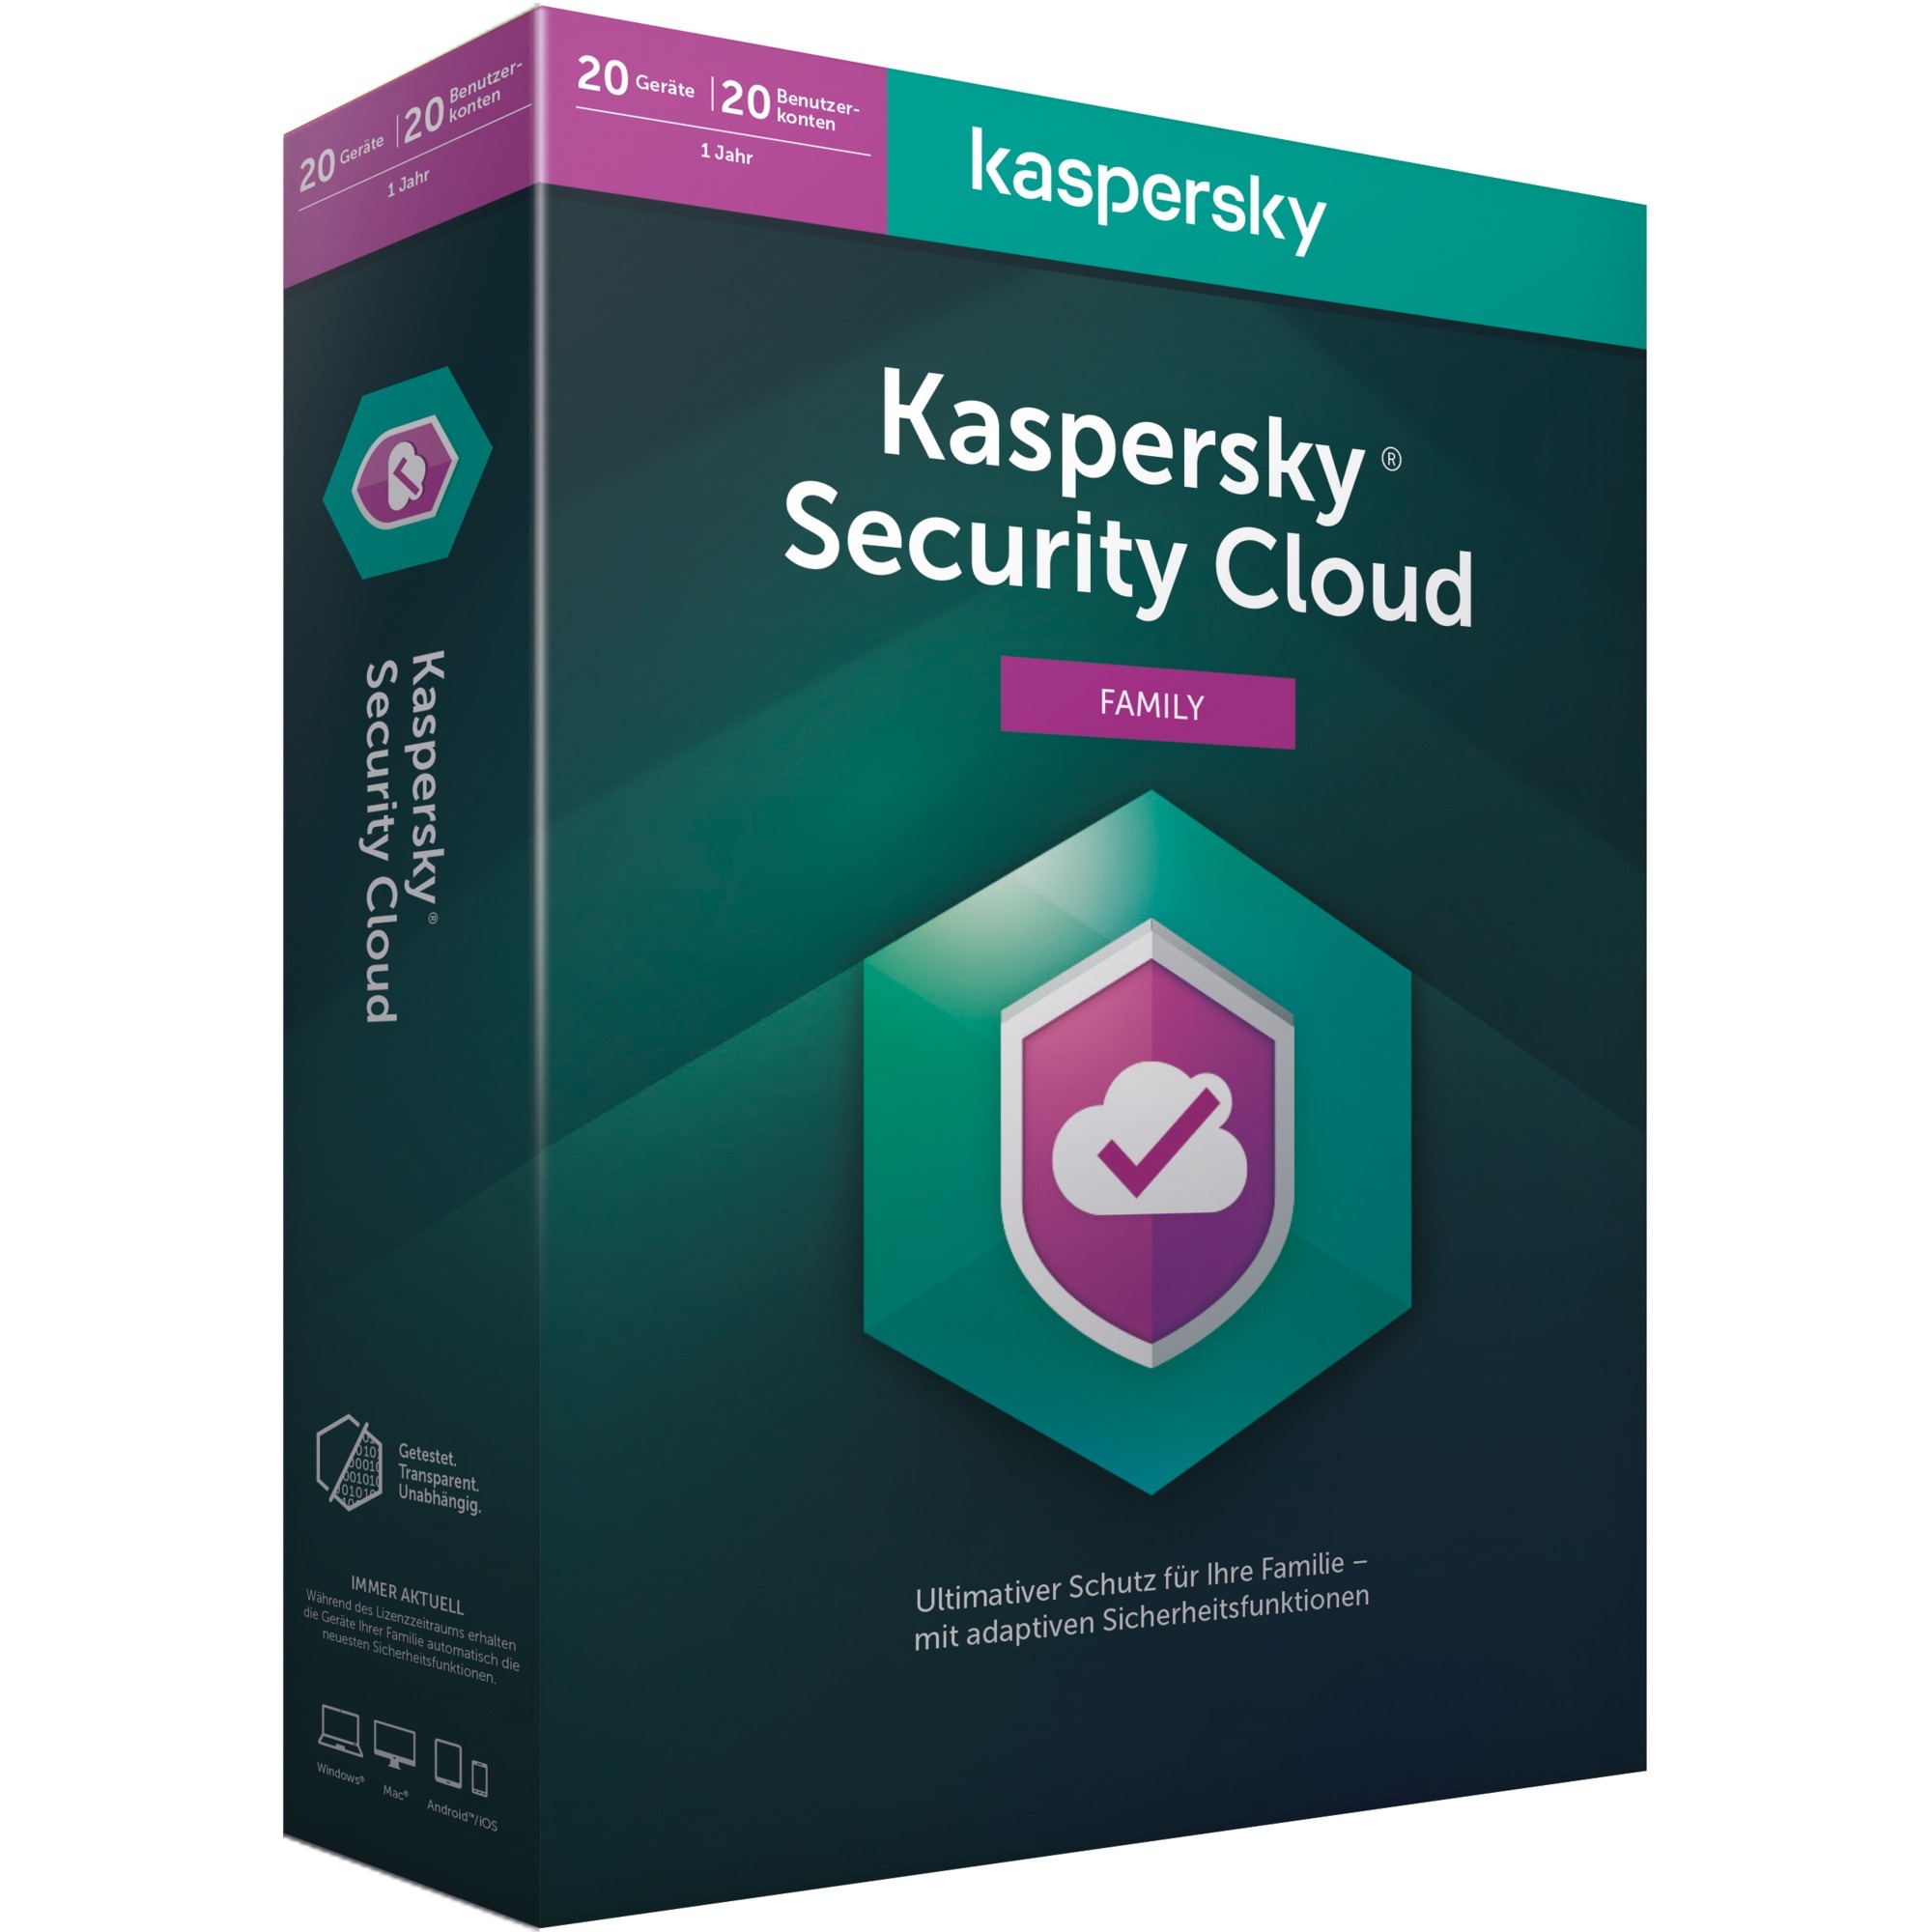 Kaspersky Security Cloud (Family)